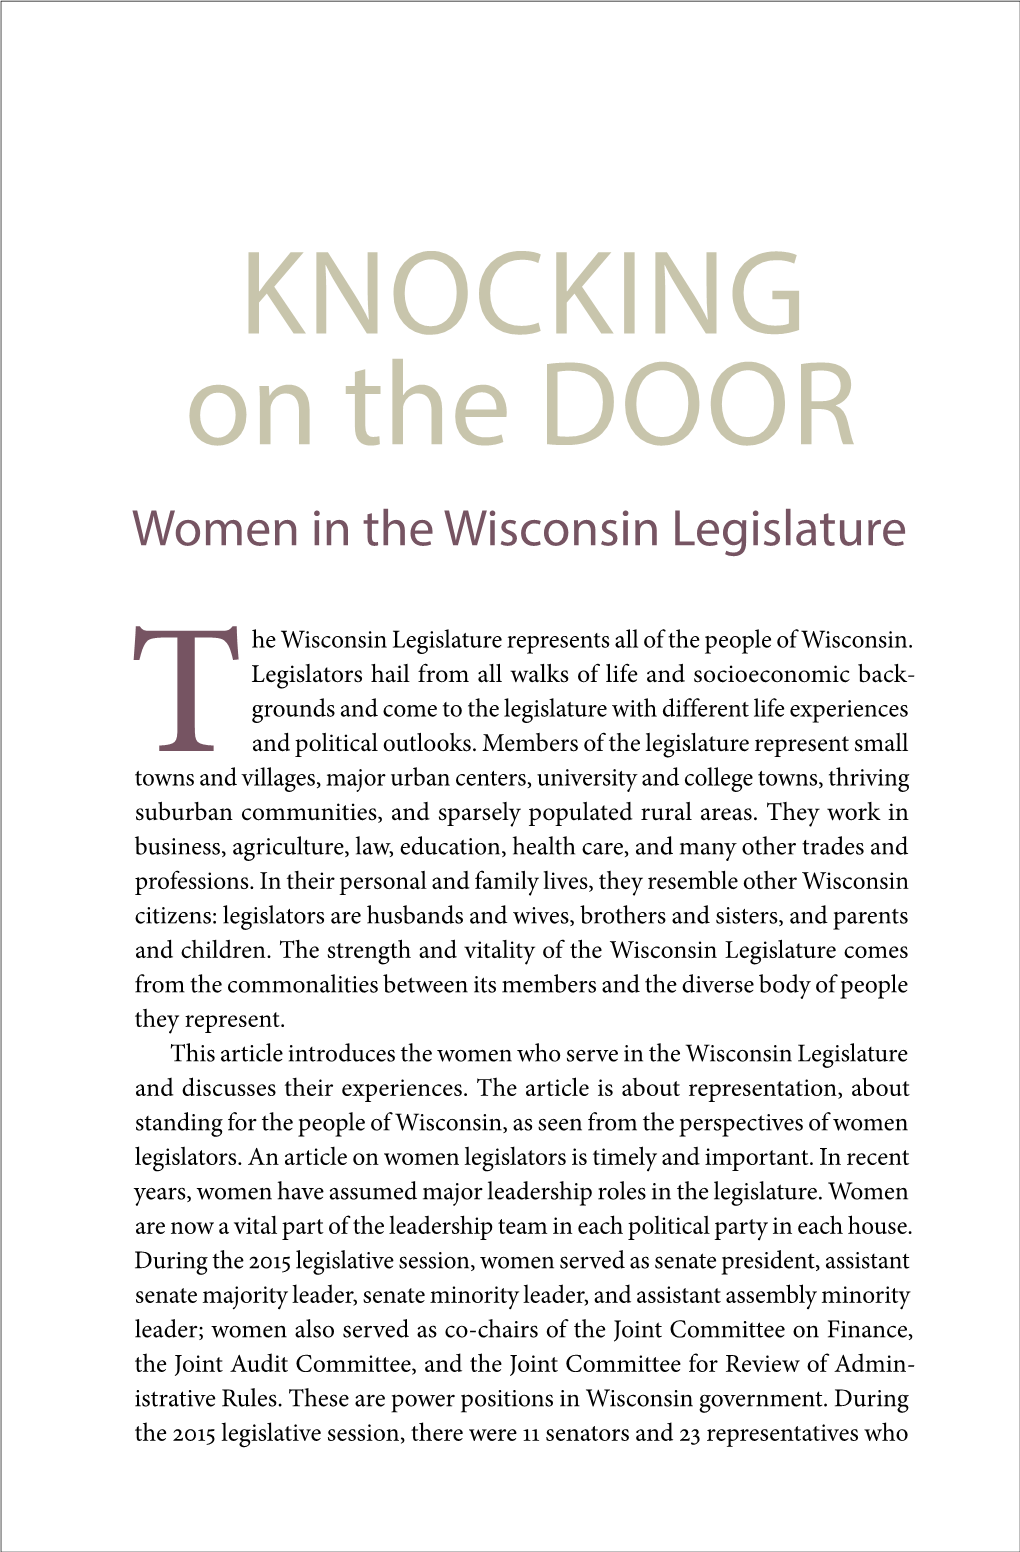 Women in the Wisconsin Legislature